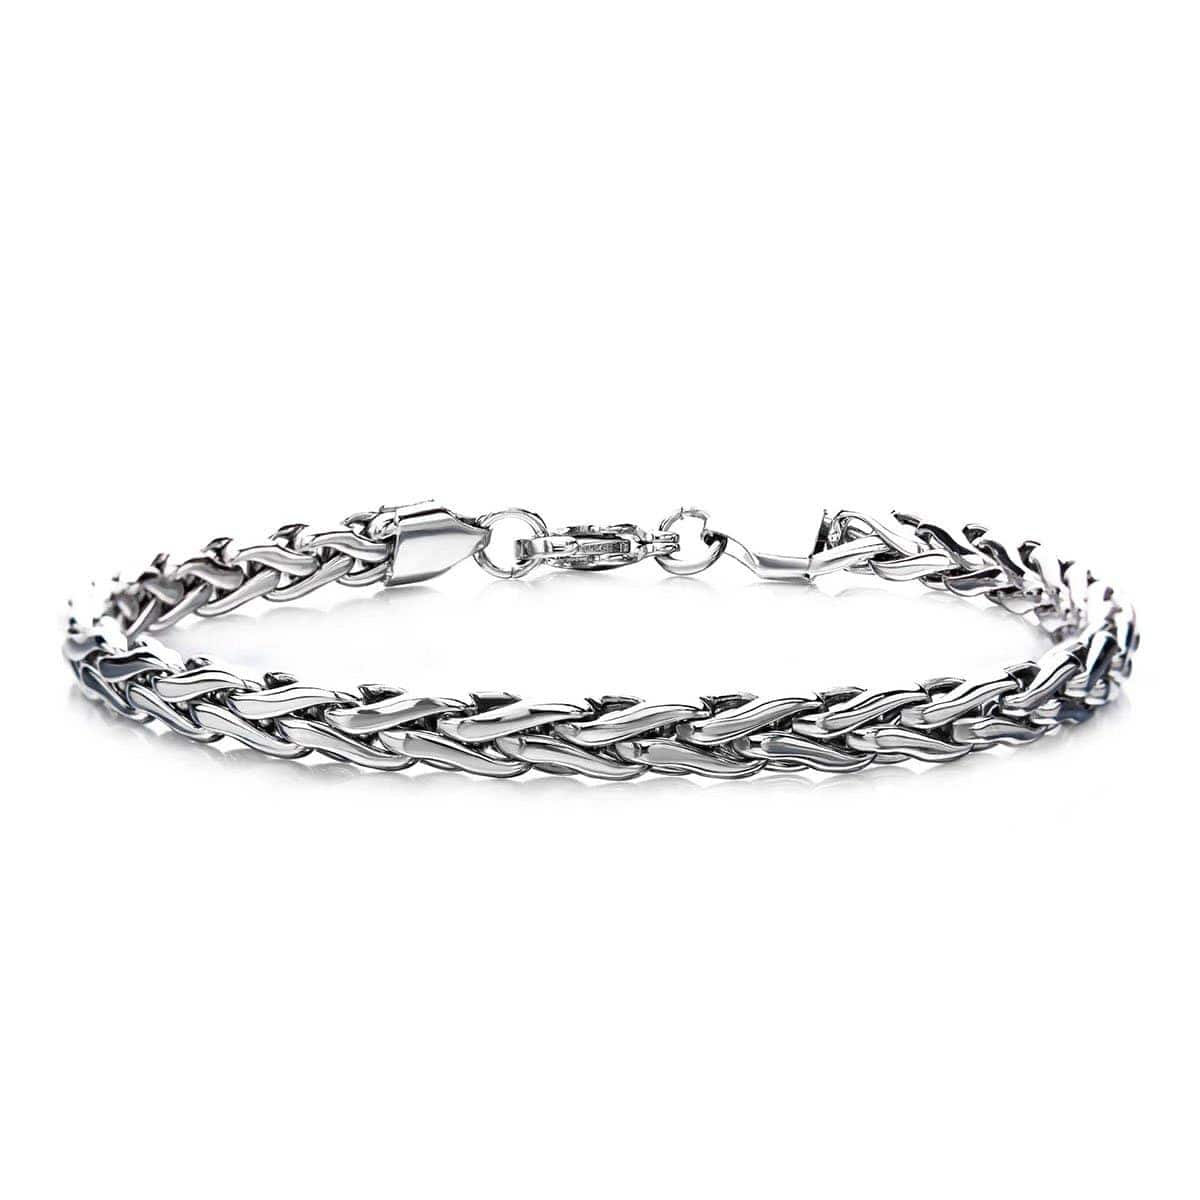 INOX JEWELRY Bracelets Silver Tone Stainless Steel 6mm Spiga Chain Link Bracelet BR21601S